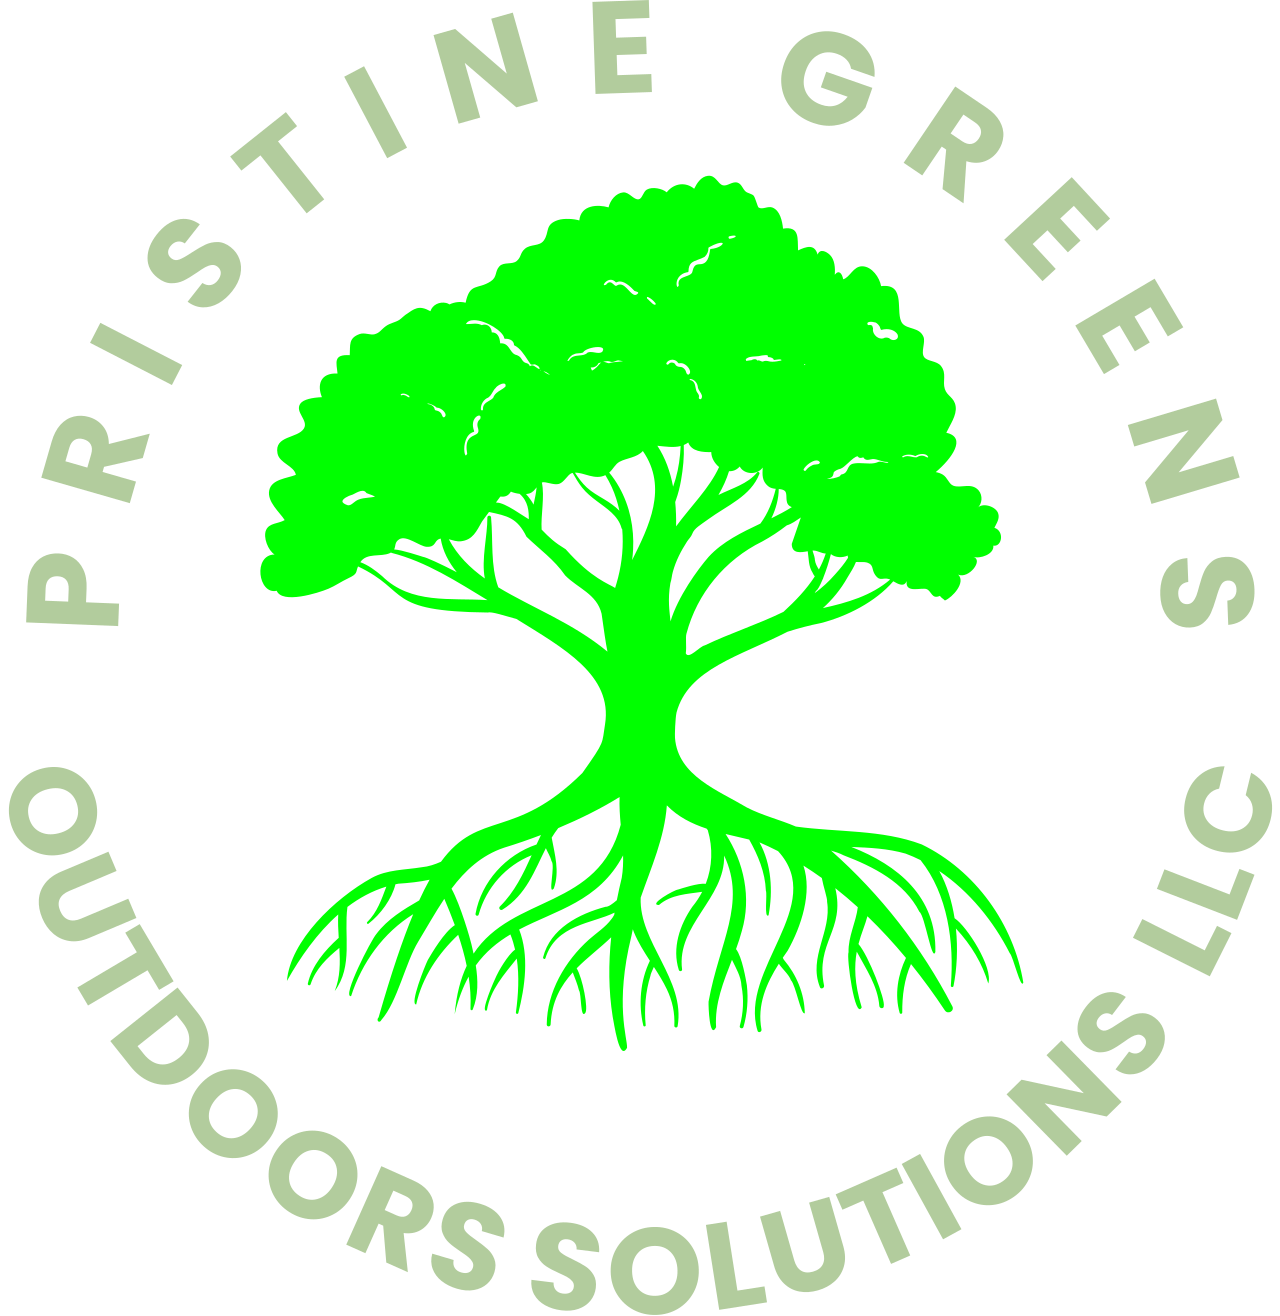 Pristine Greens's logo